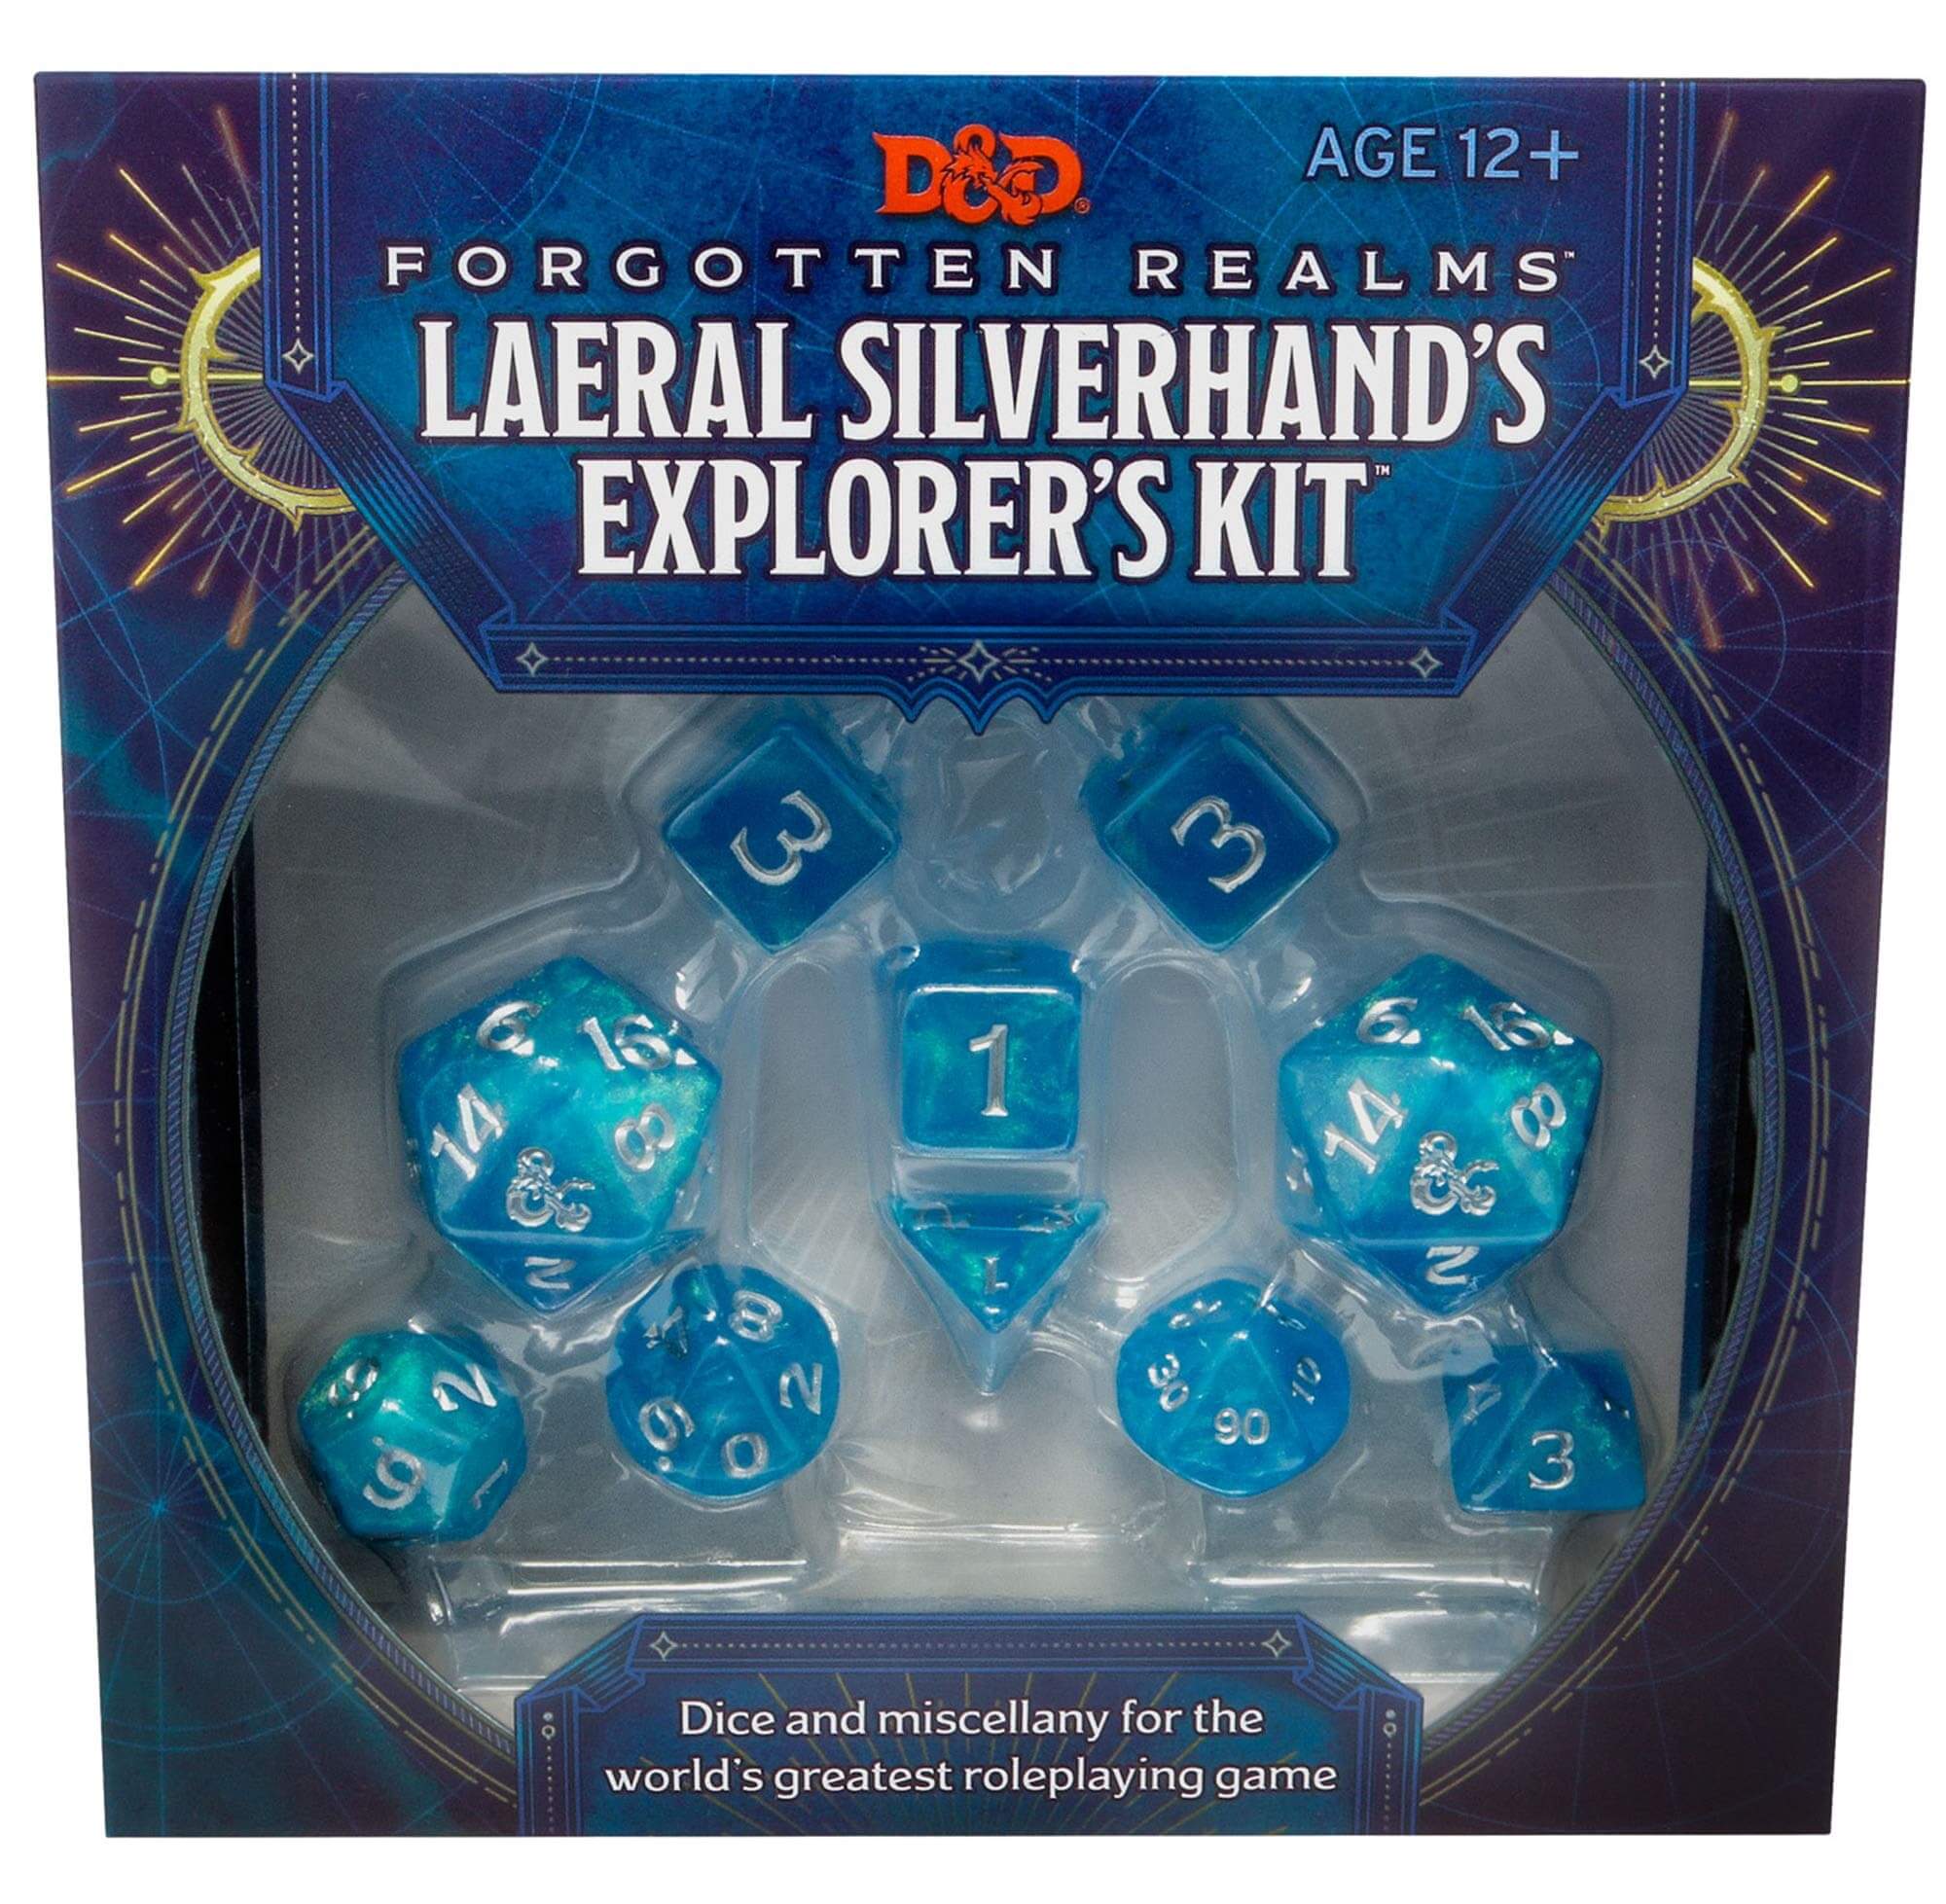 D&D Forgotten Realms Laeral Silverhand's Explorer's Kit